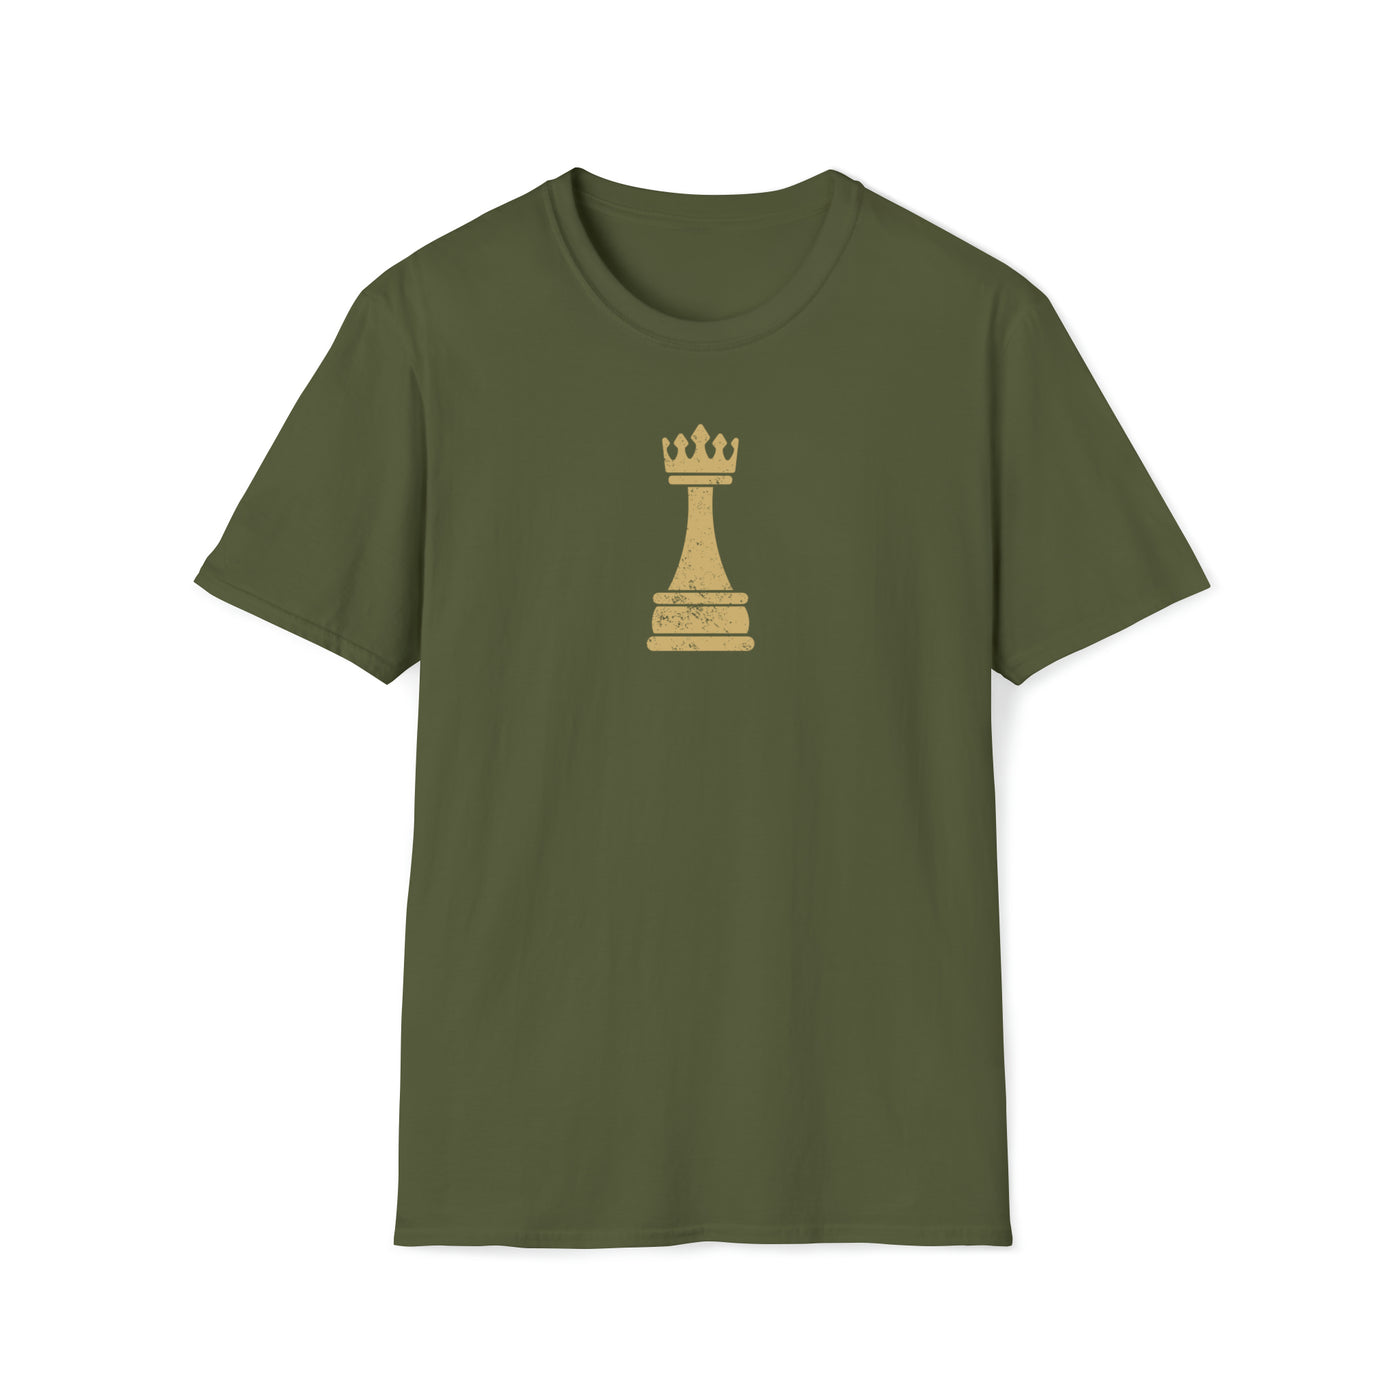 King Unisex T-Shirt